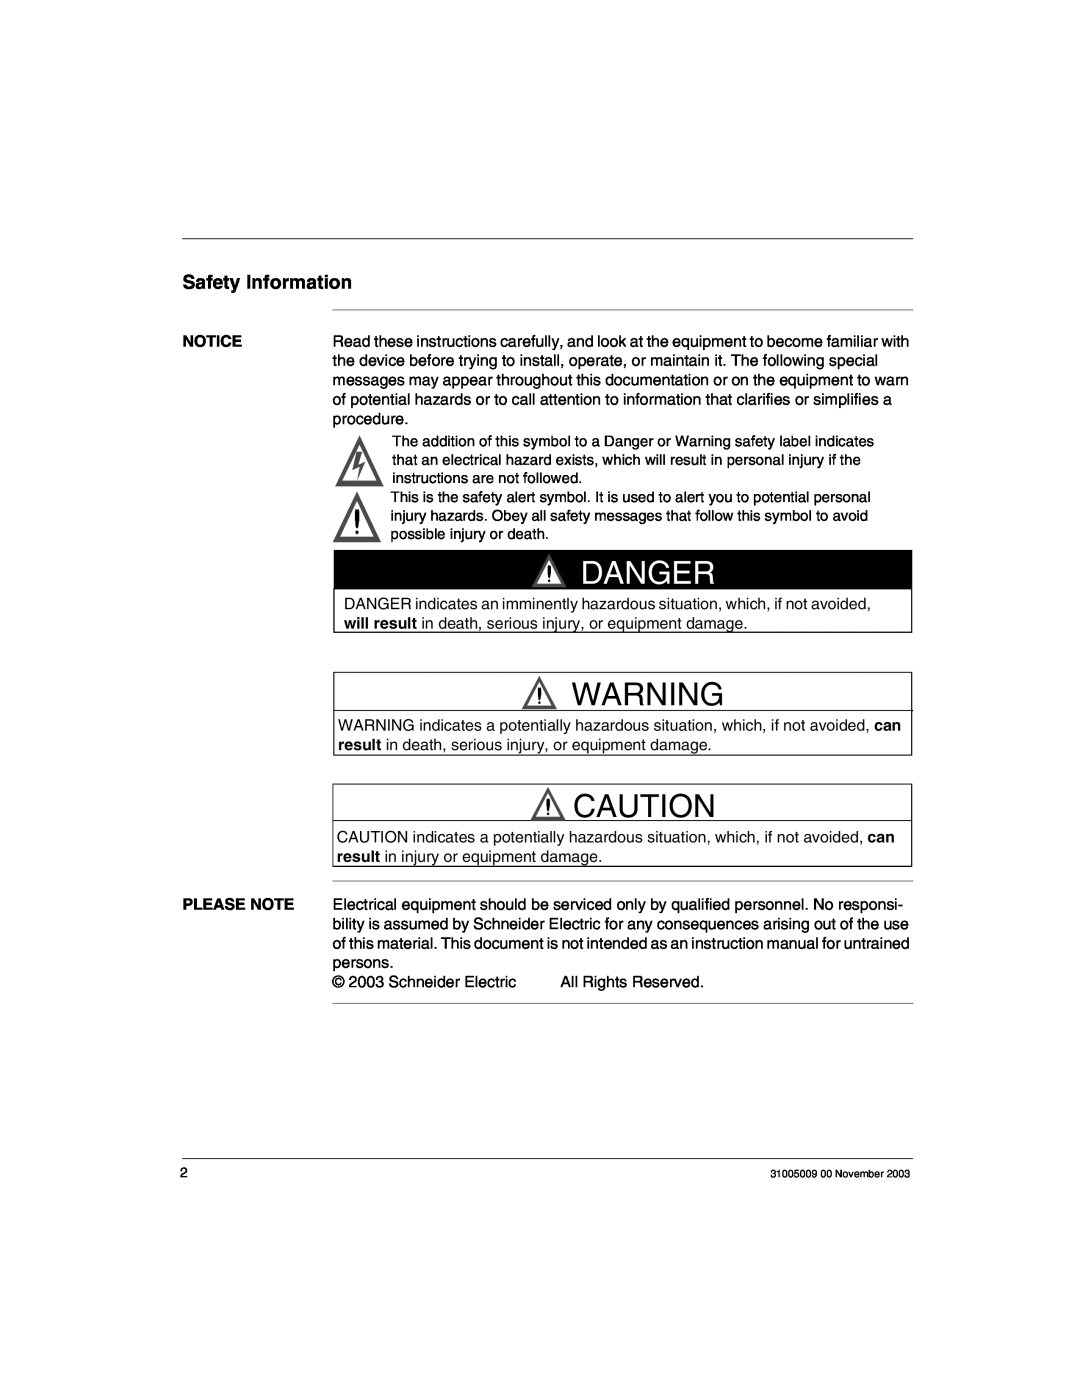 Schneider Electric 170AMM11030 manual Safety Information, Please Note, Danger 